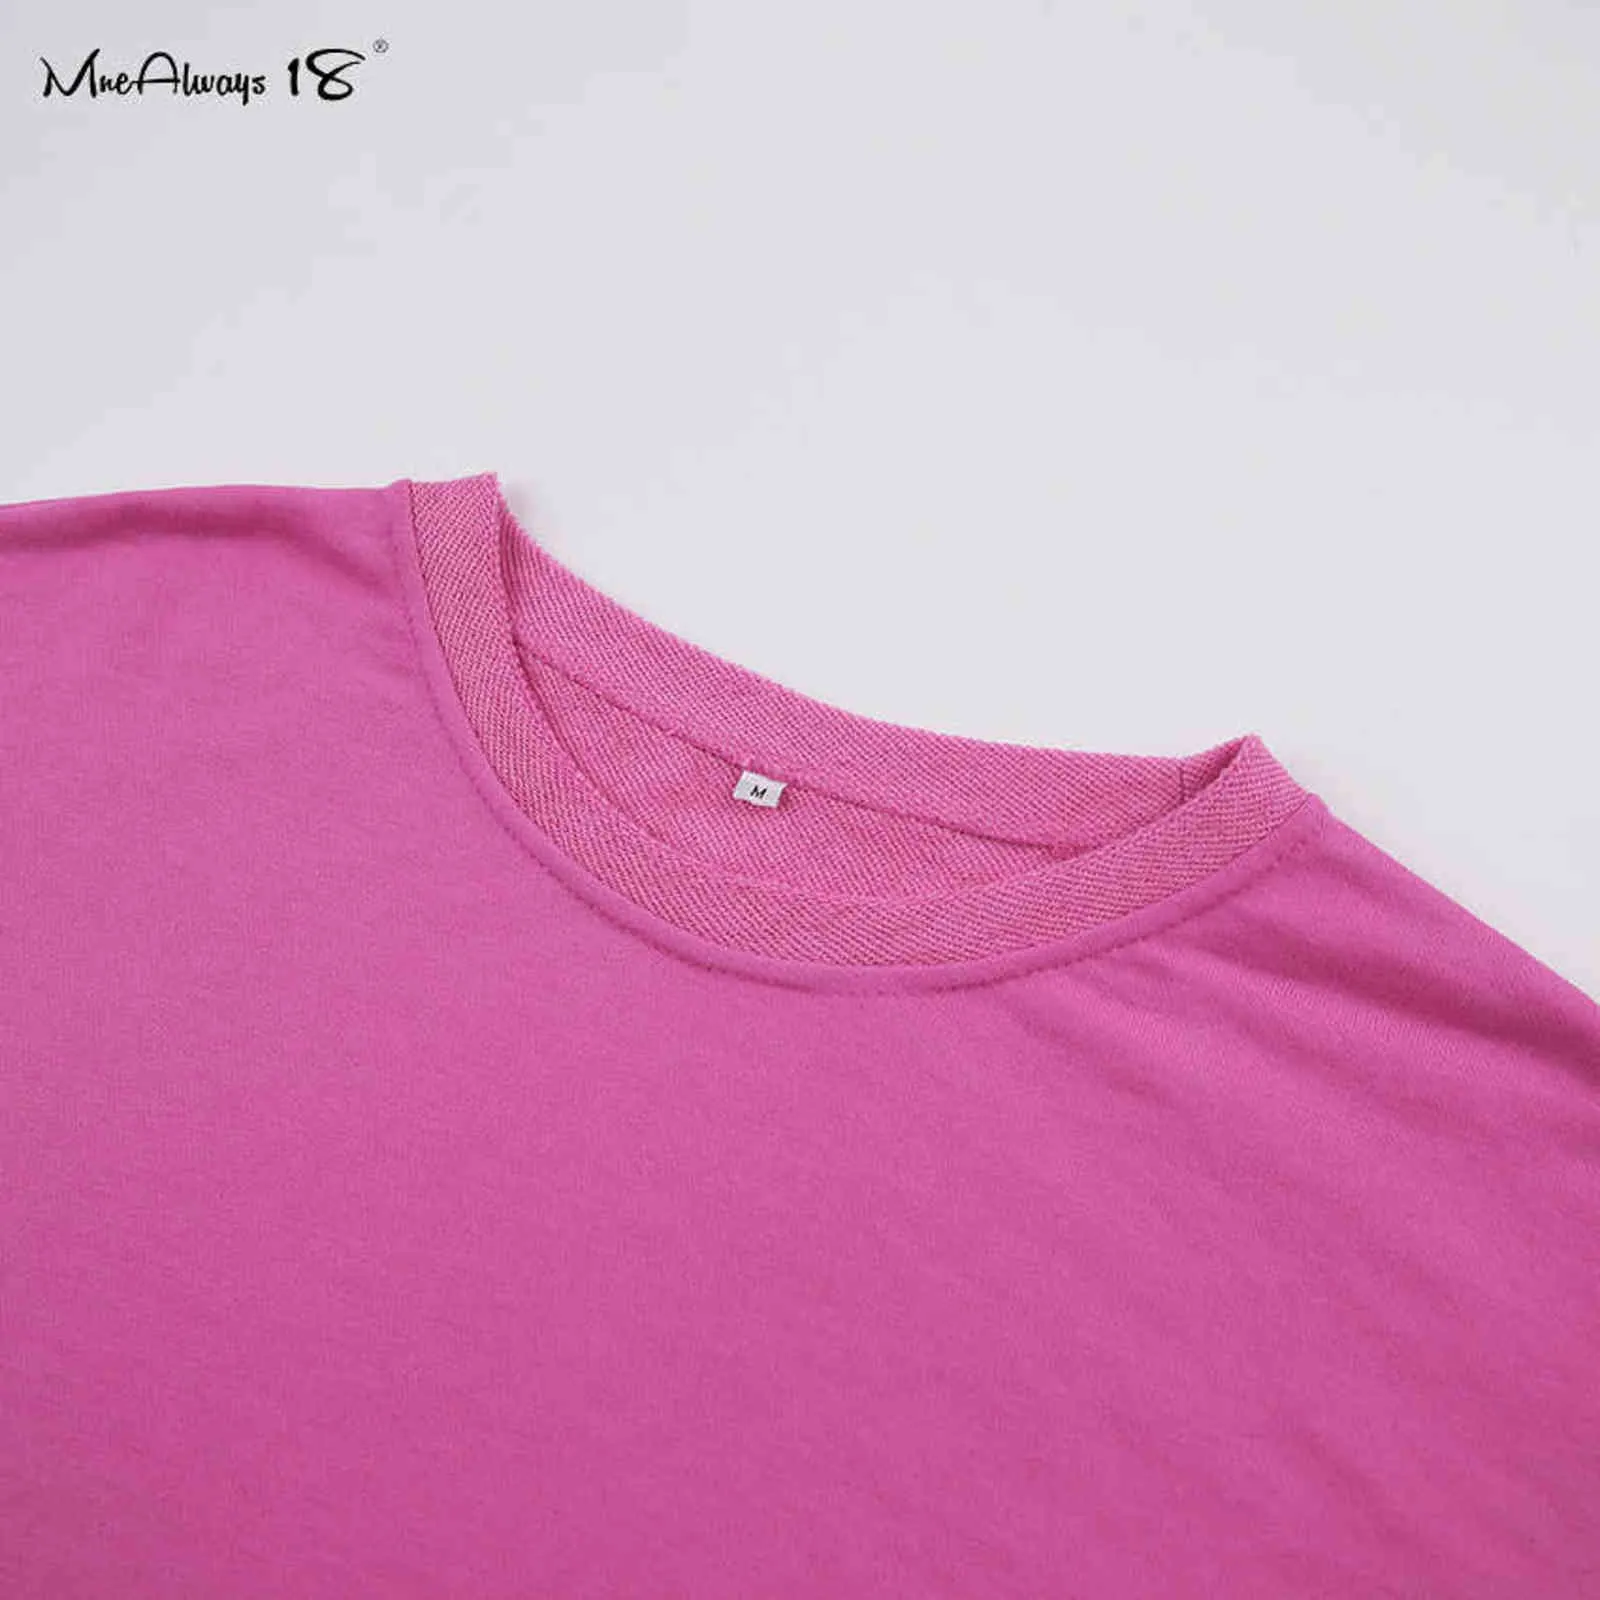 Mnealways18 rosa sweatpants 2 stycke kvinna pullover tracksuit långa ben byxor kostym sport outfit fall kvinnlig sweatshirt set 211109